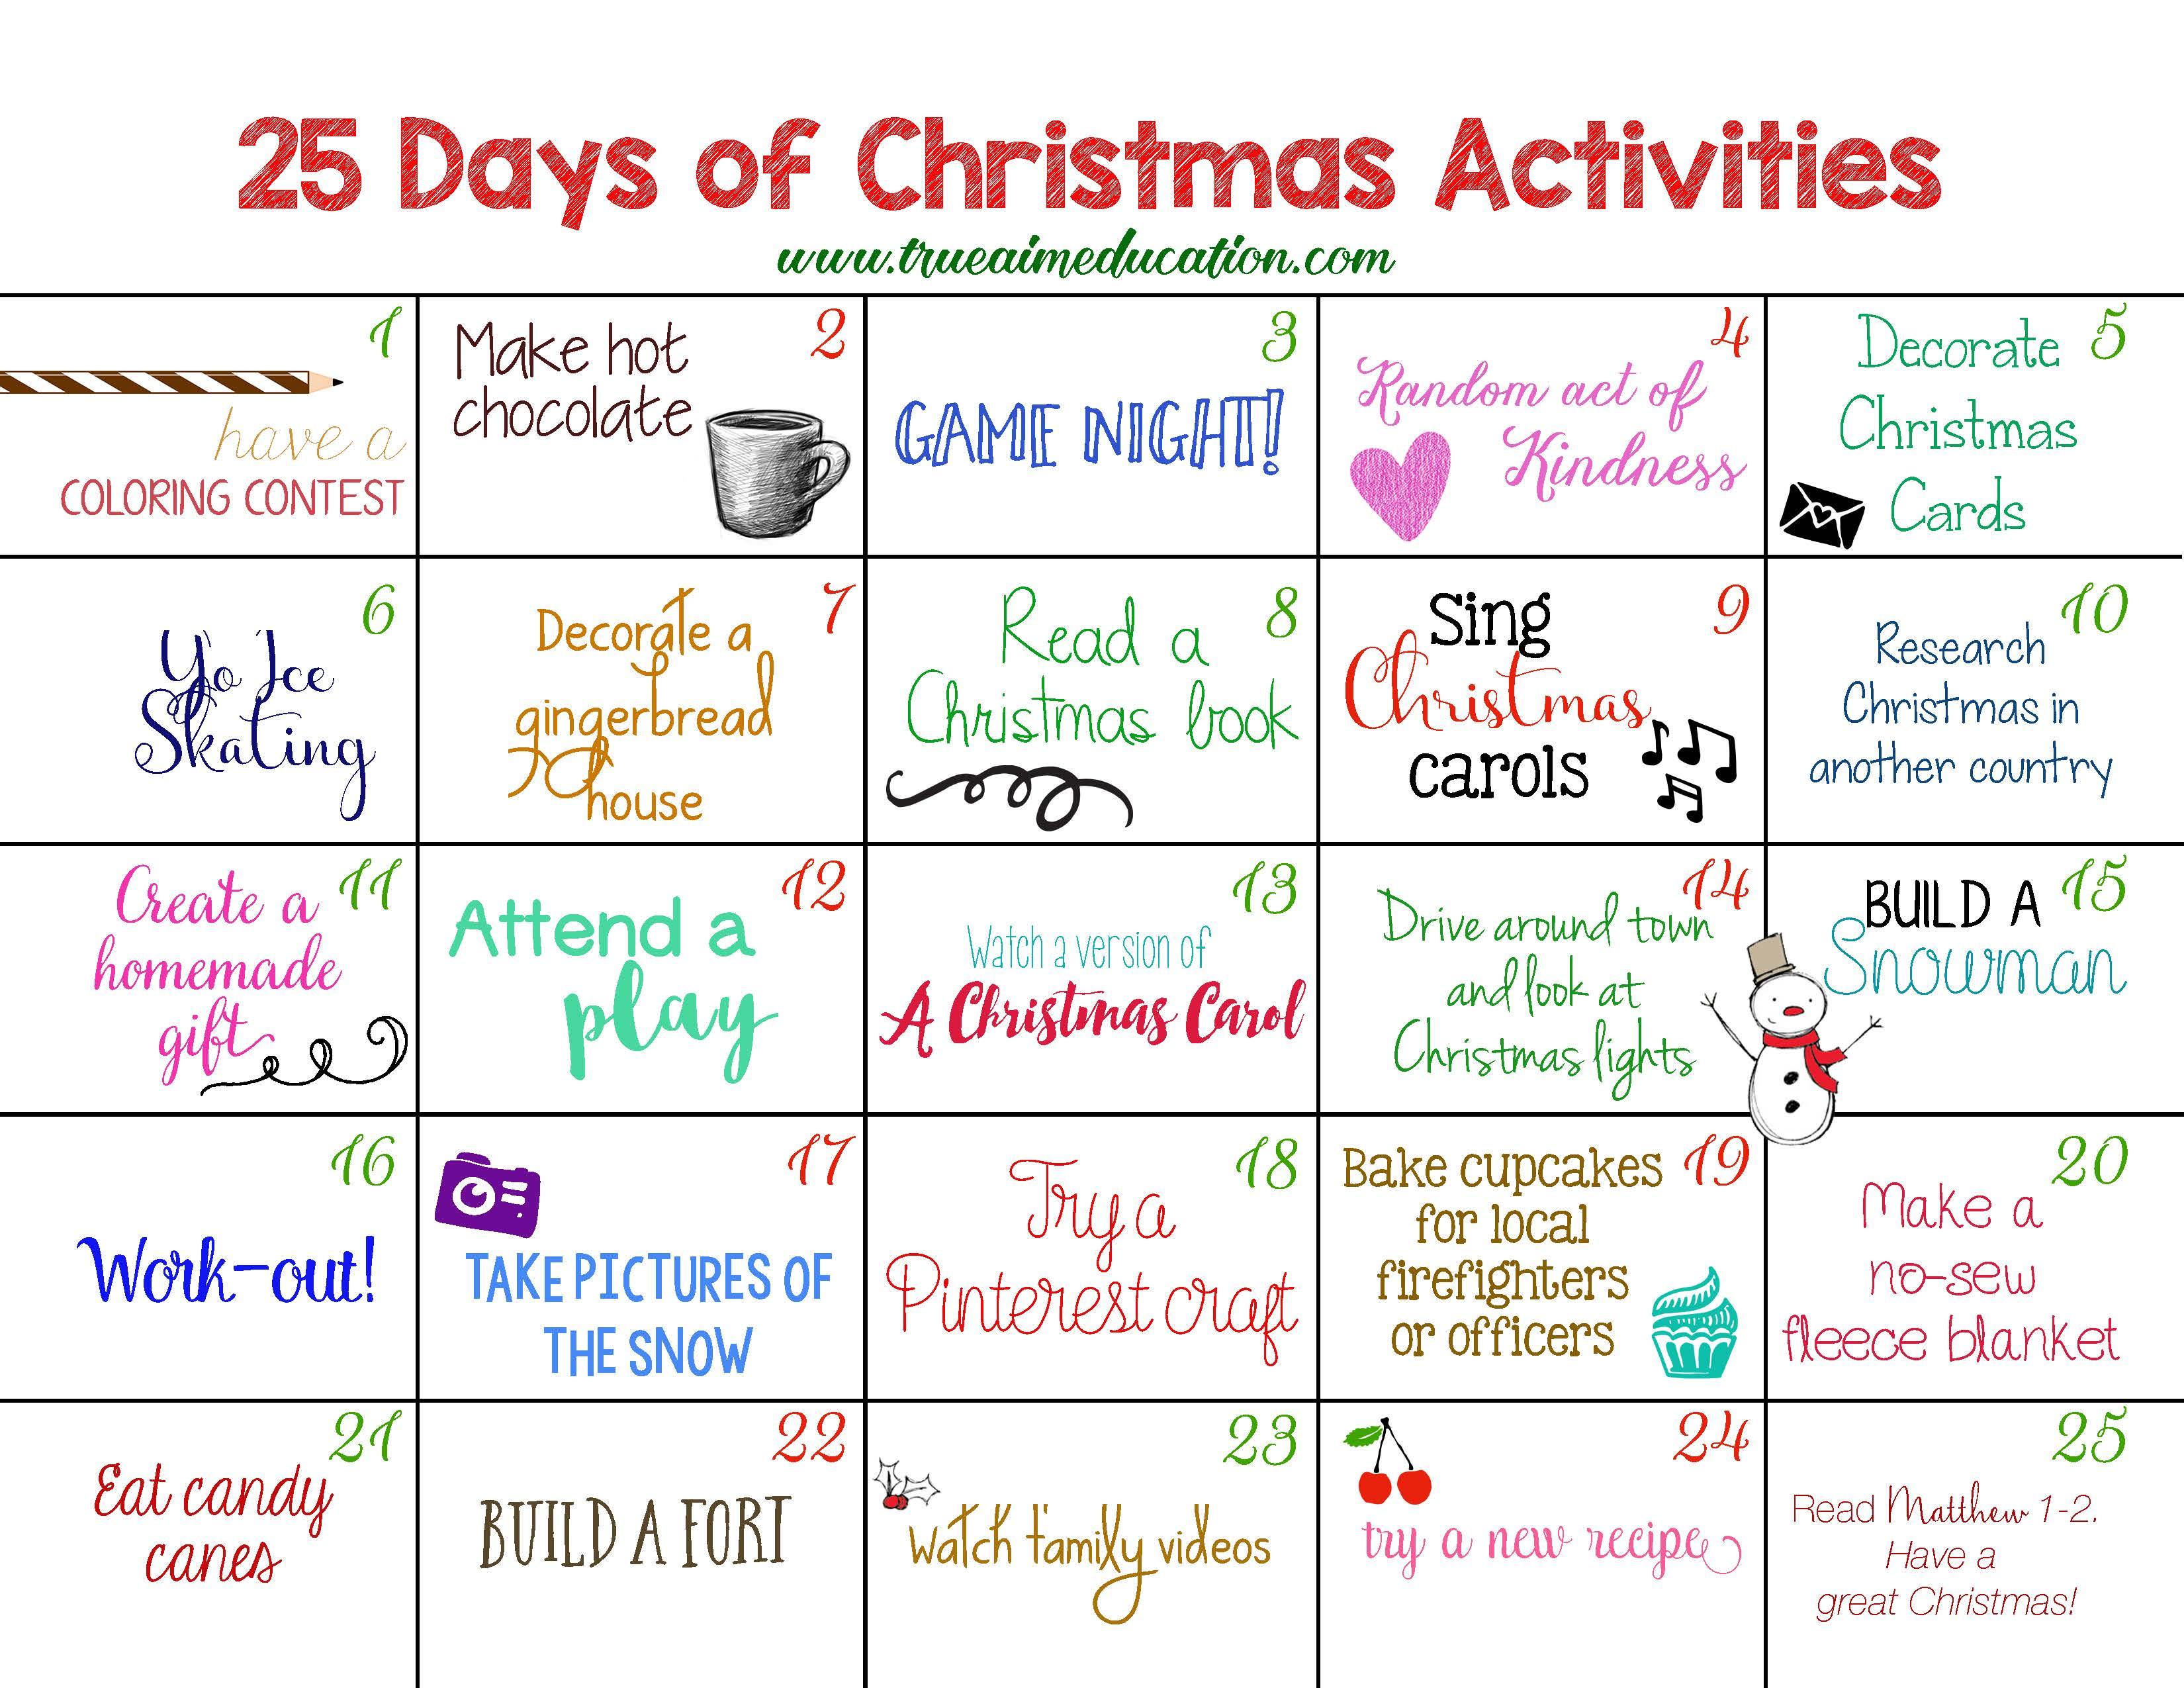 Christmas activities calendar image